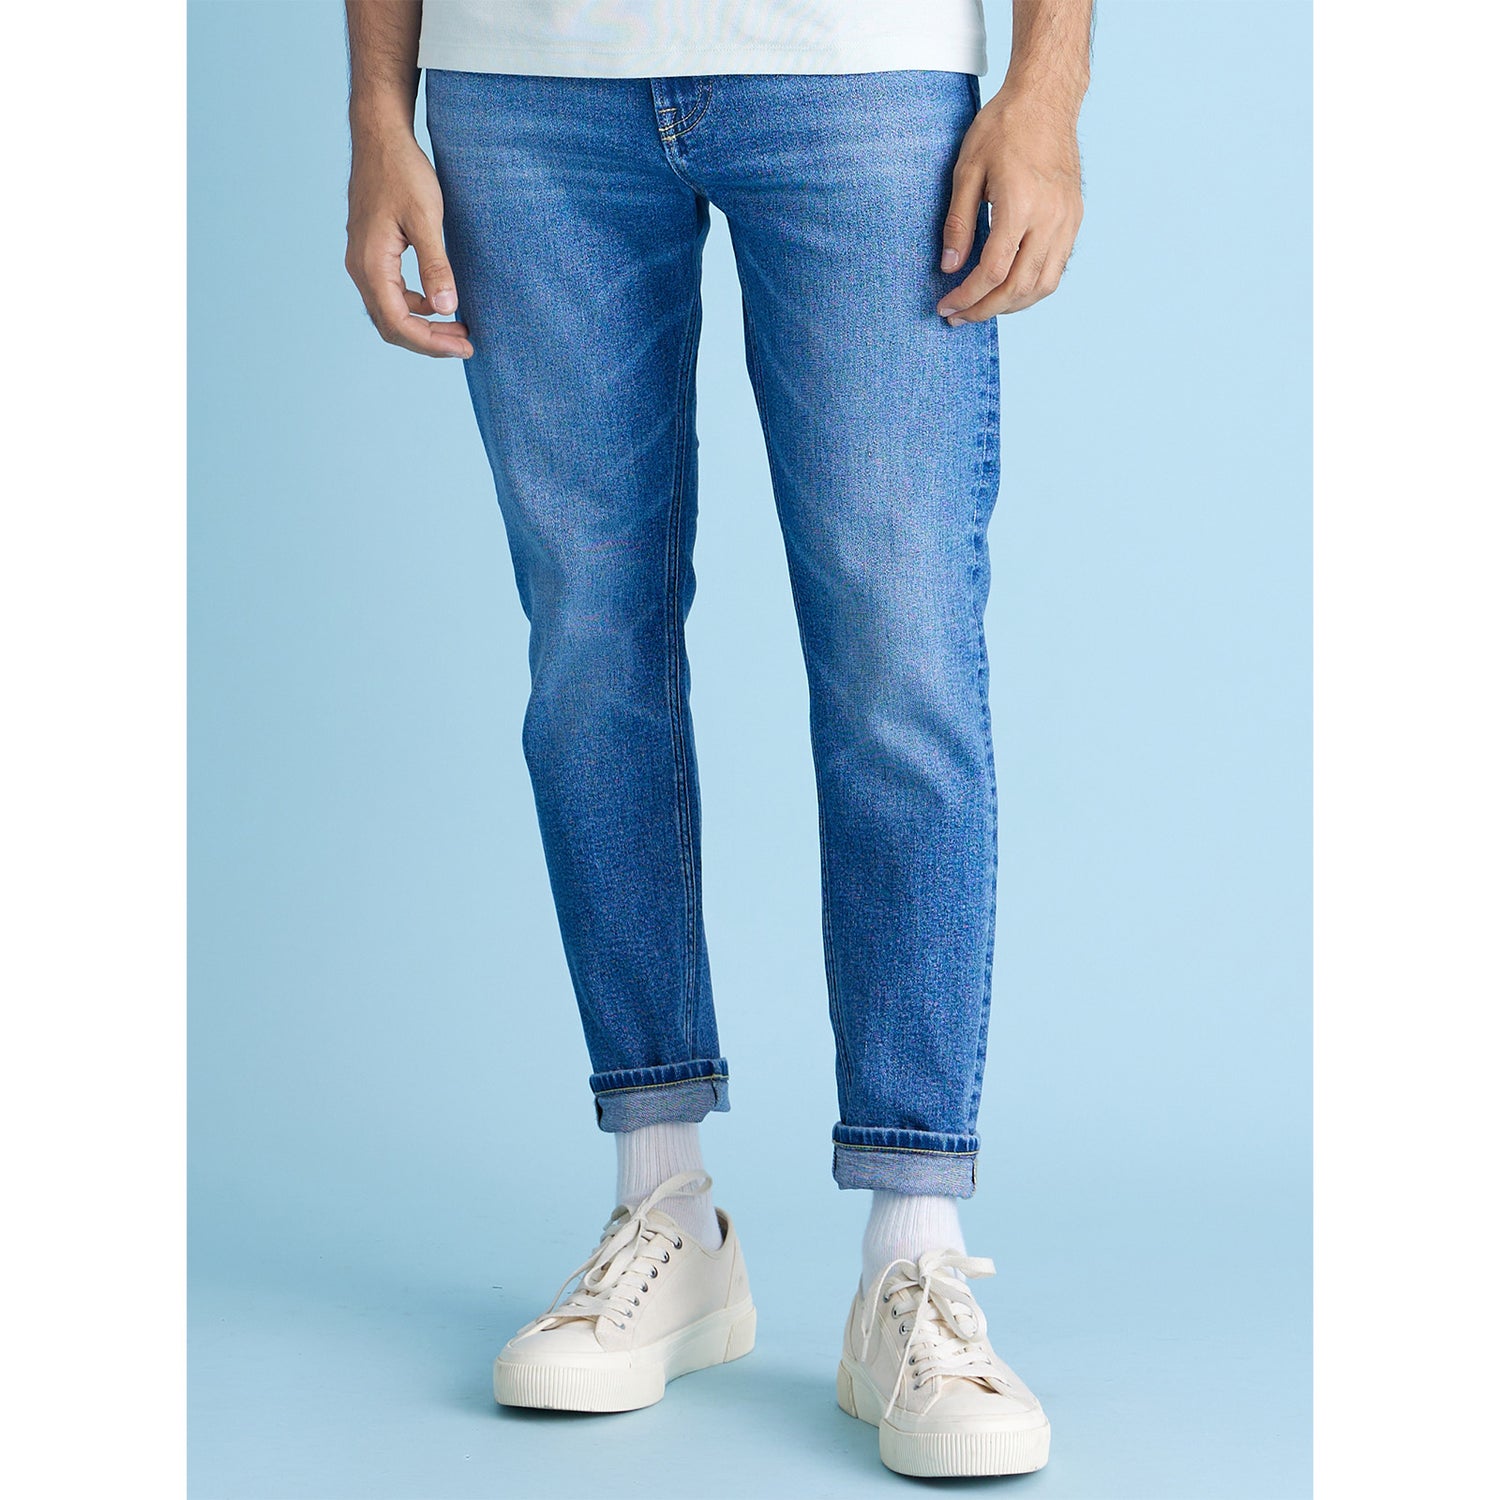 Celio Men's Clothing | Shirts, Jeans & Outerwear